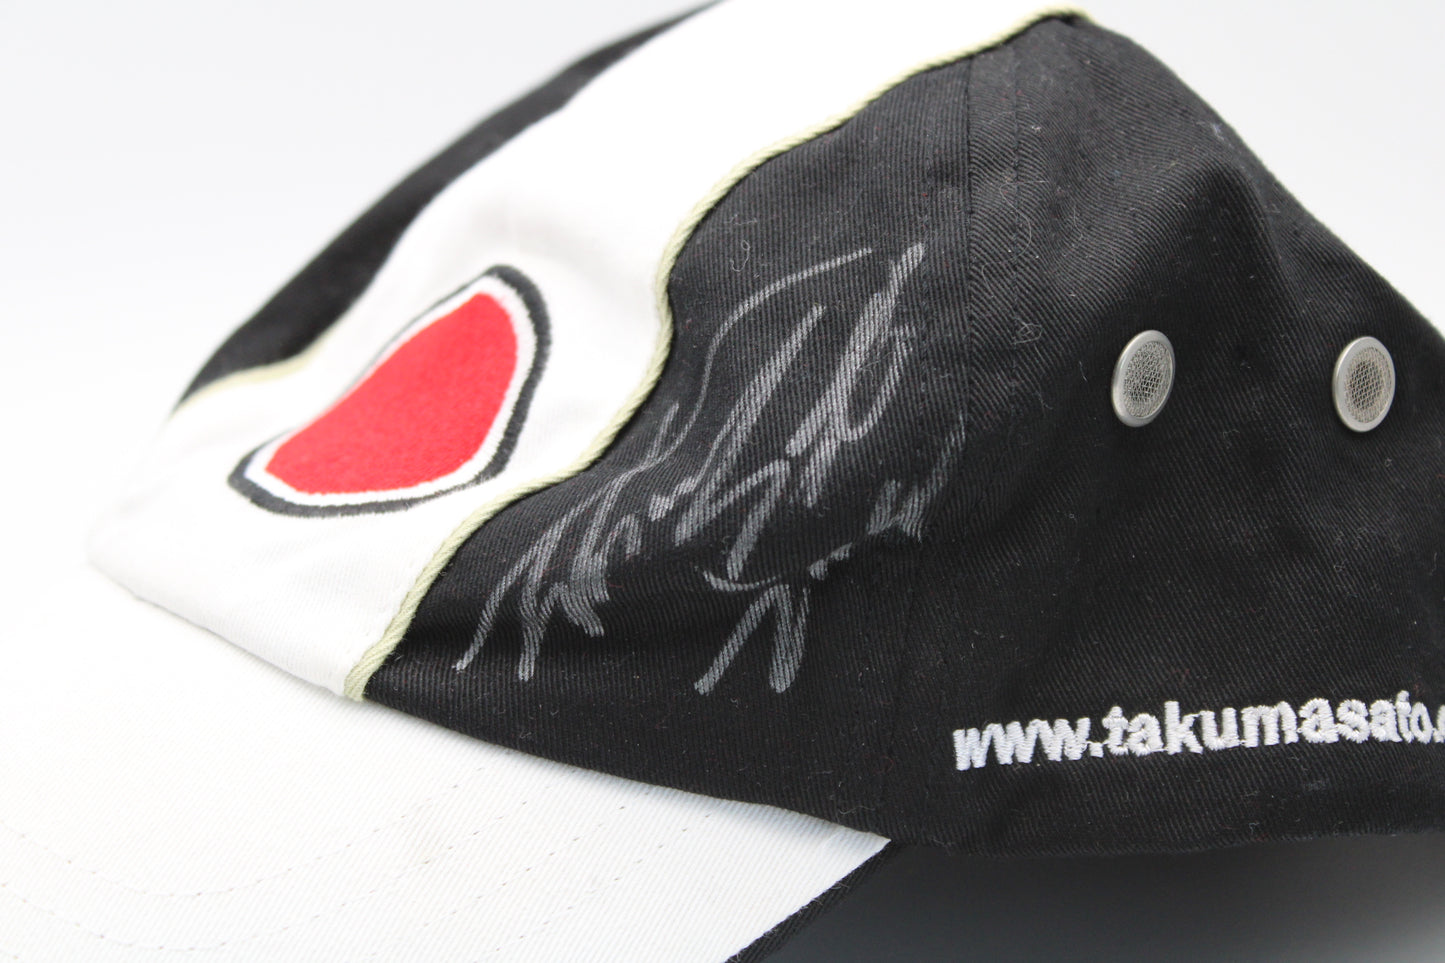 Lucky Strike BAR Honda Racing Formula 1 signed Soto hat without logo